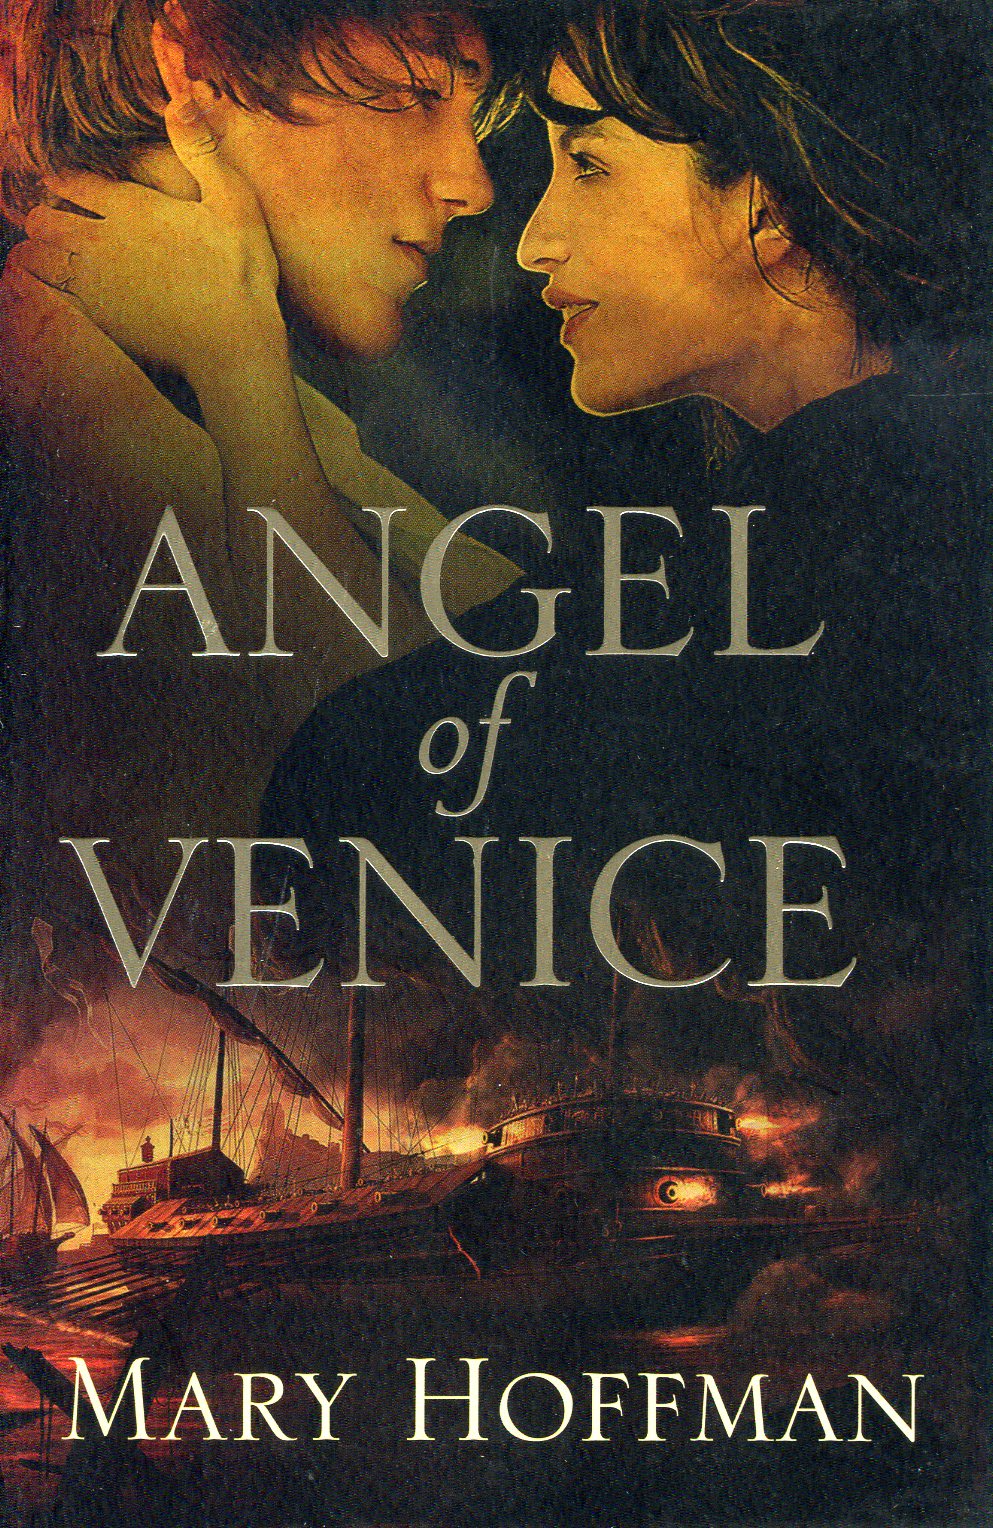 Angel Of Venice